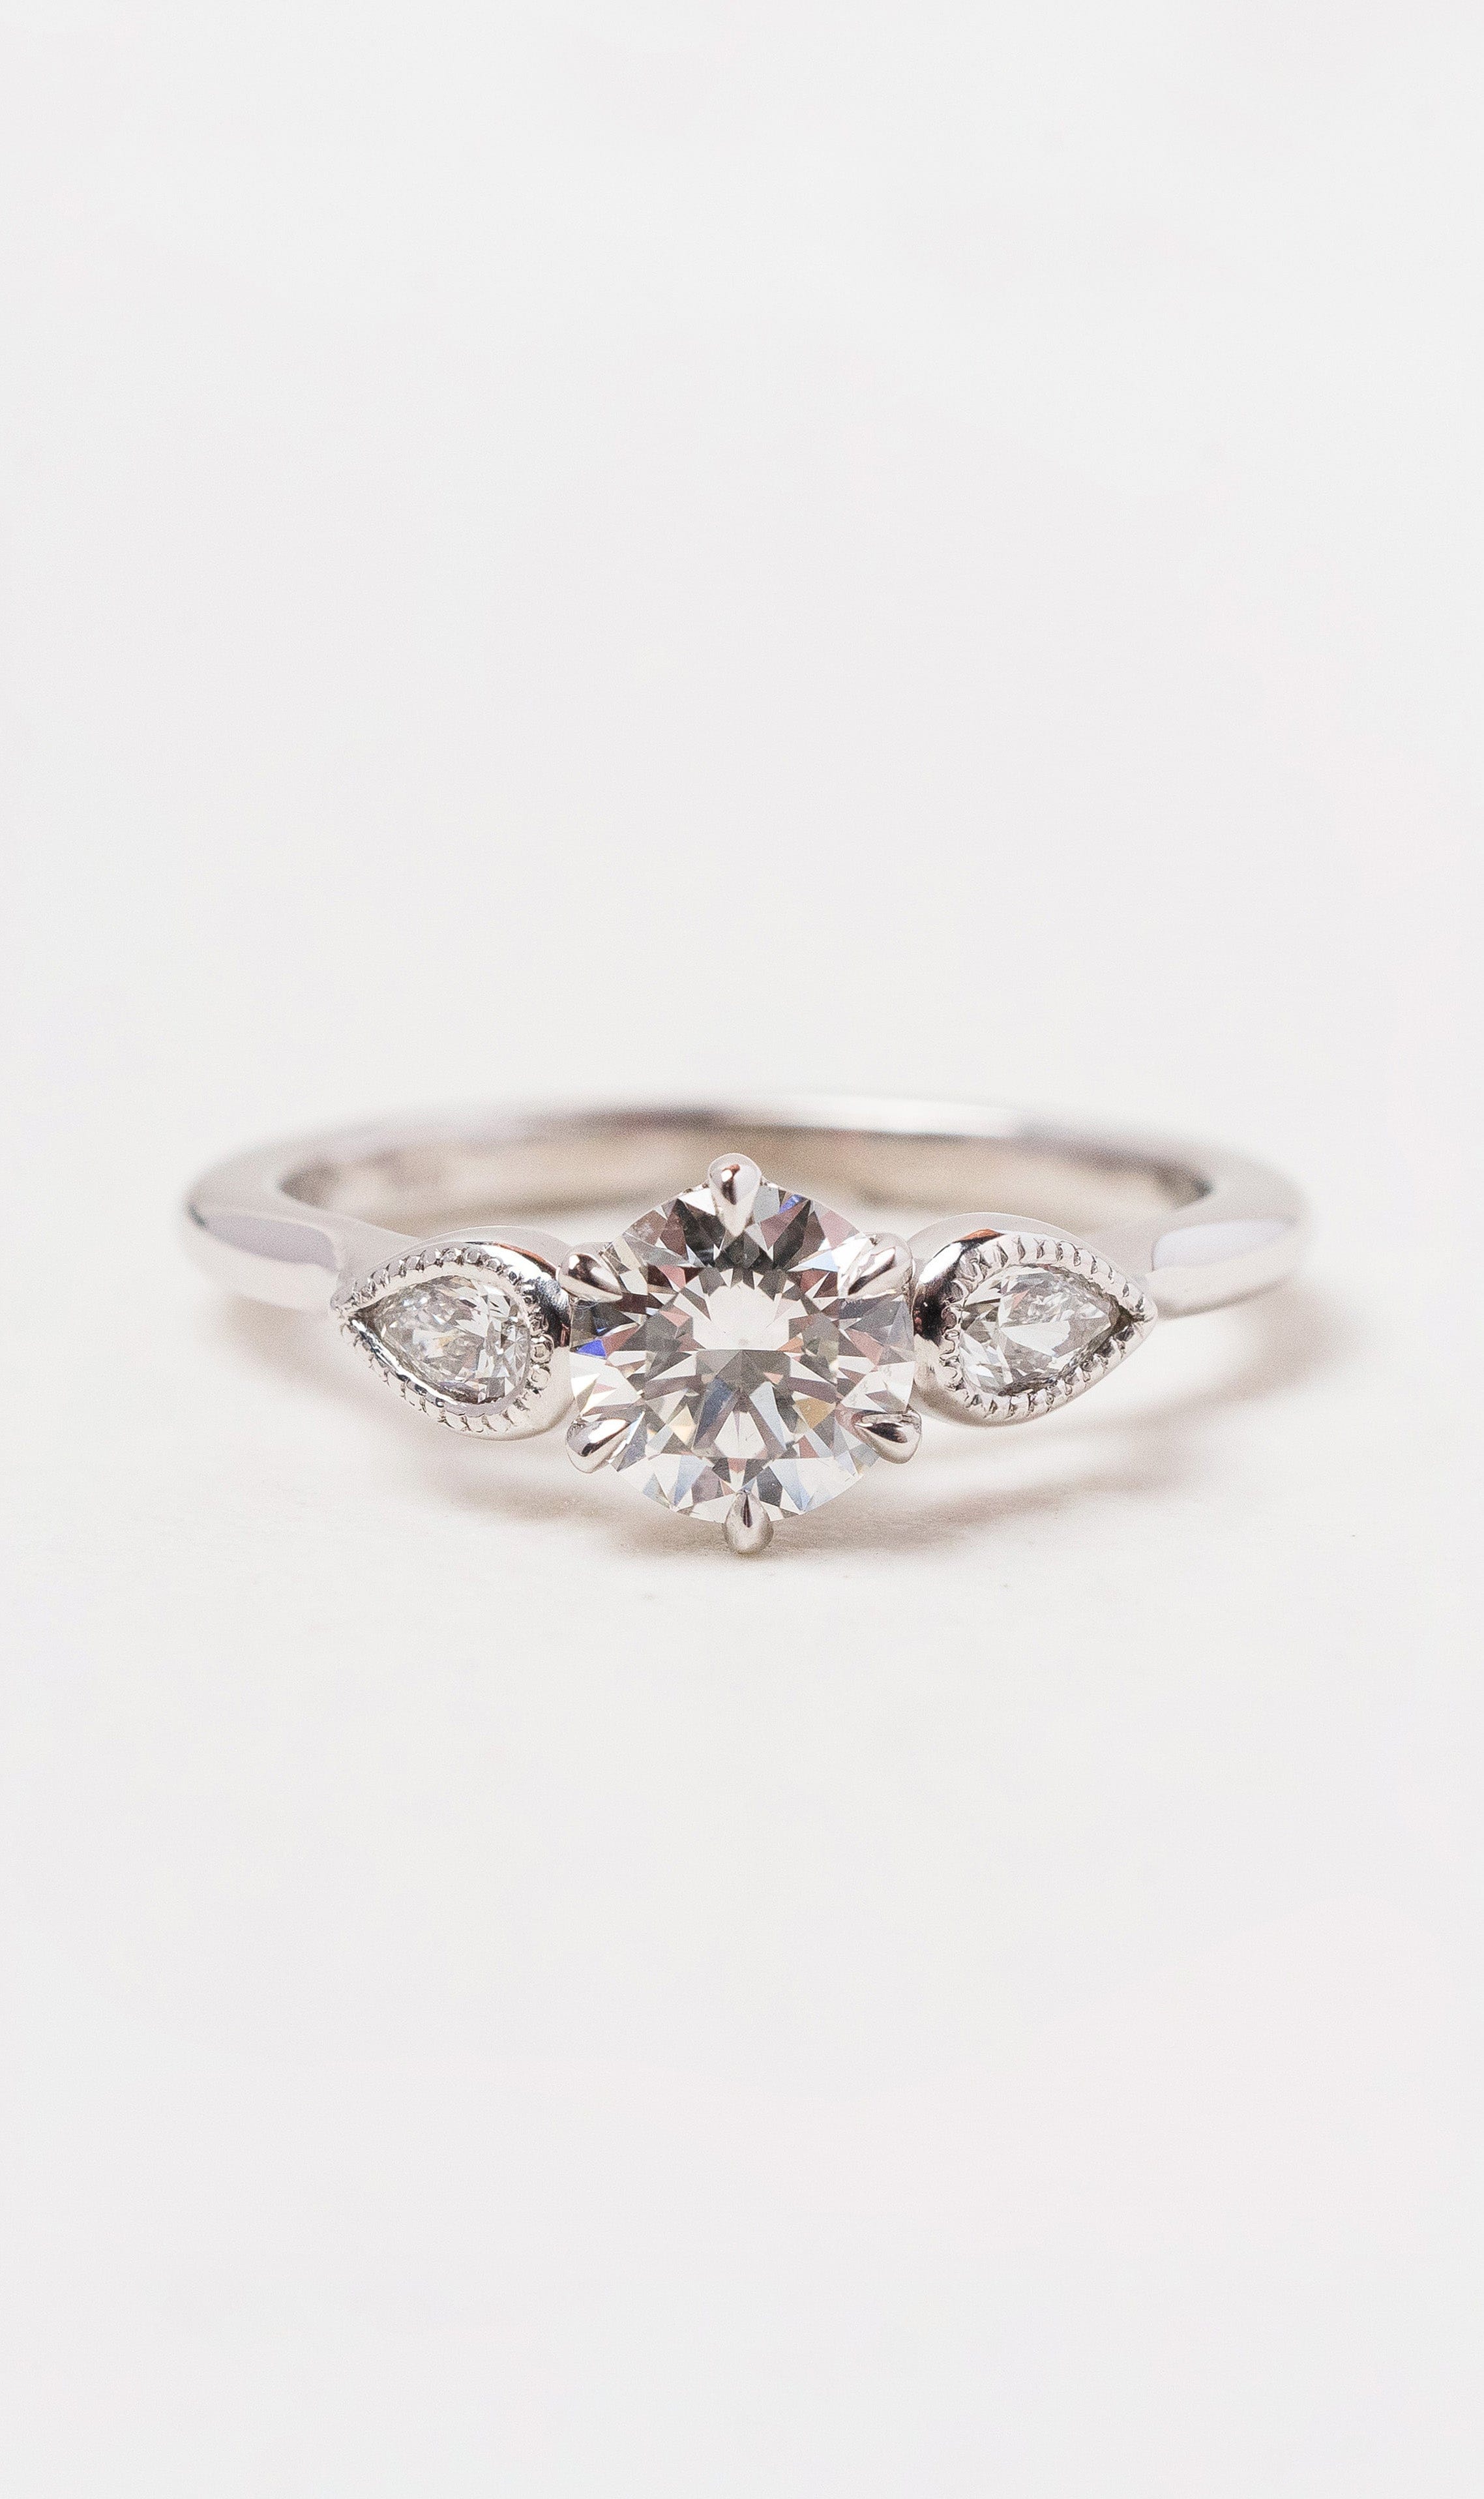 Hogans Family Jewellers 18K WG Trilogy Diamond Ring